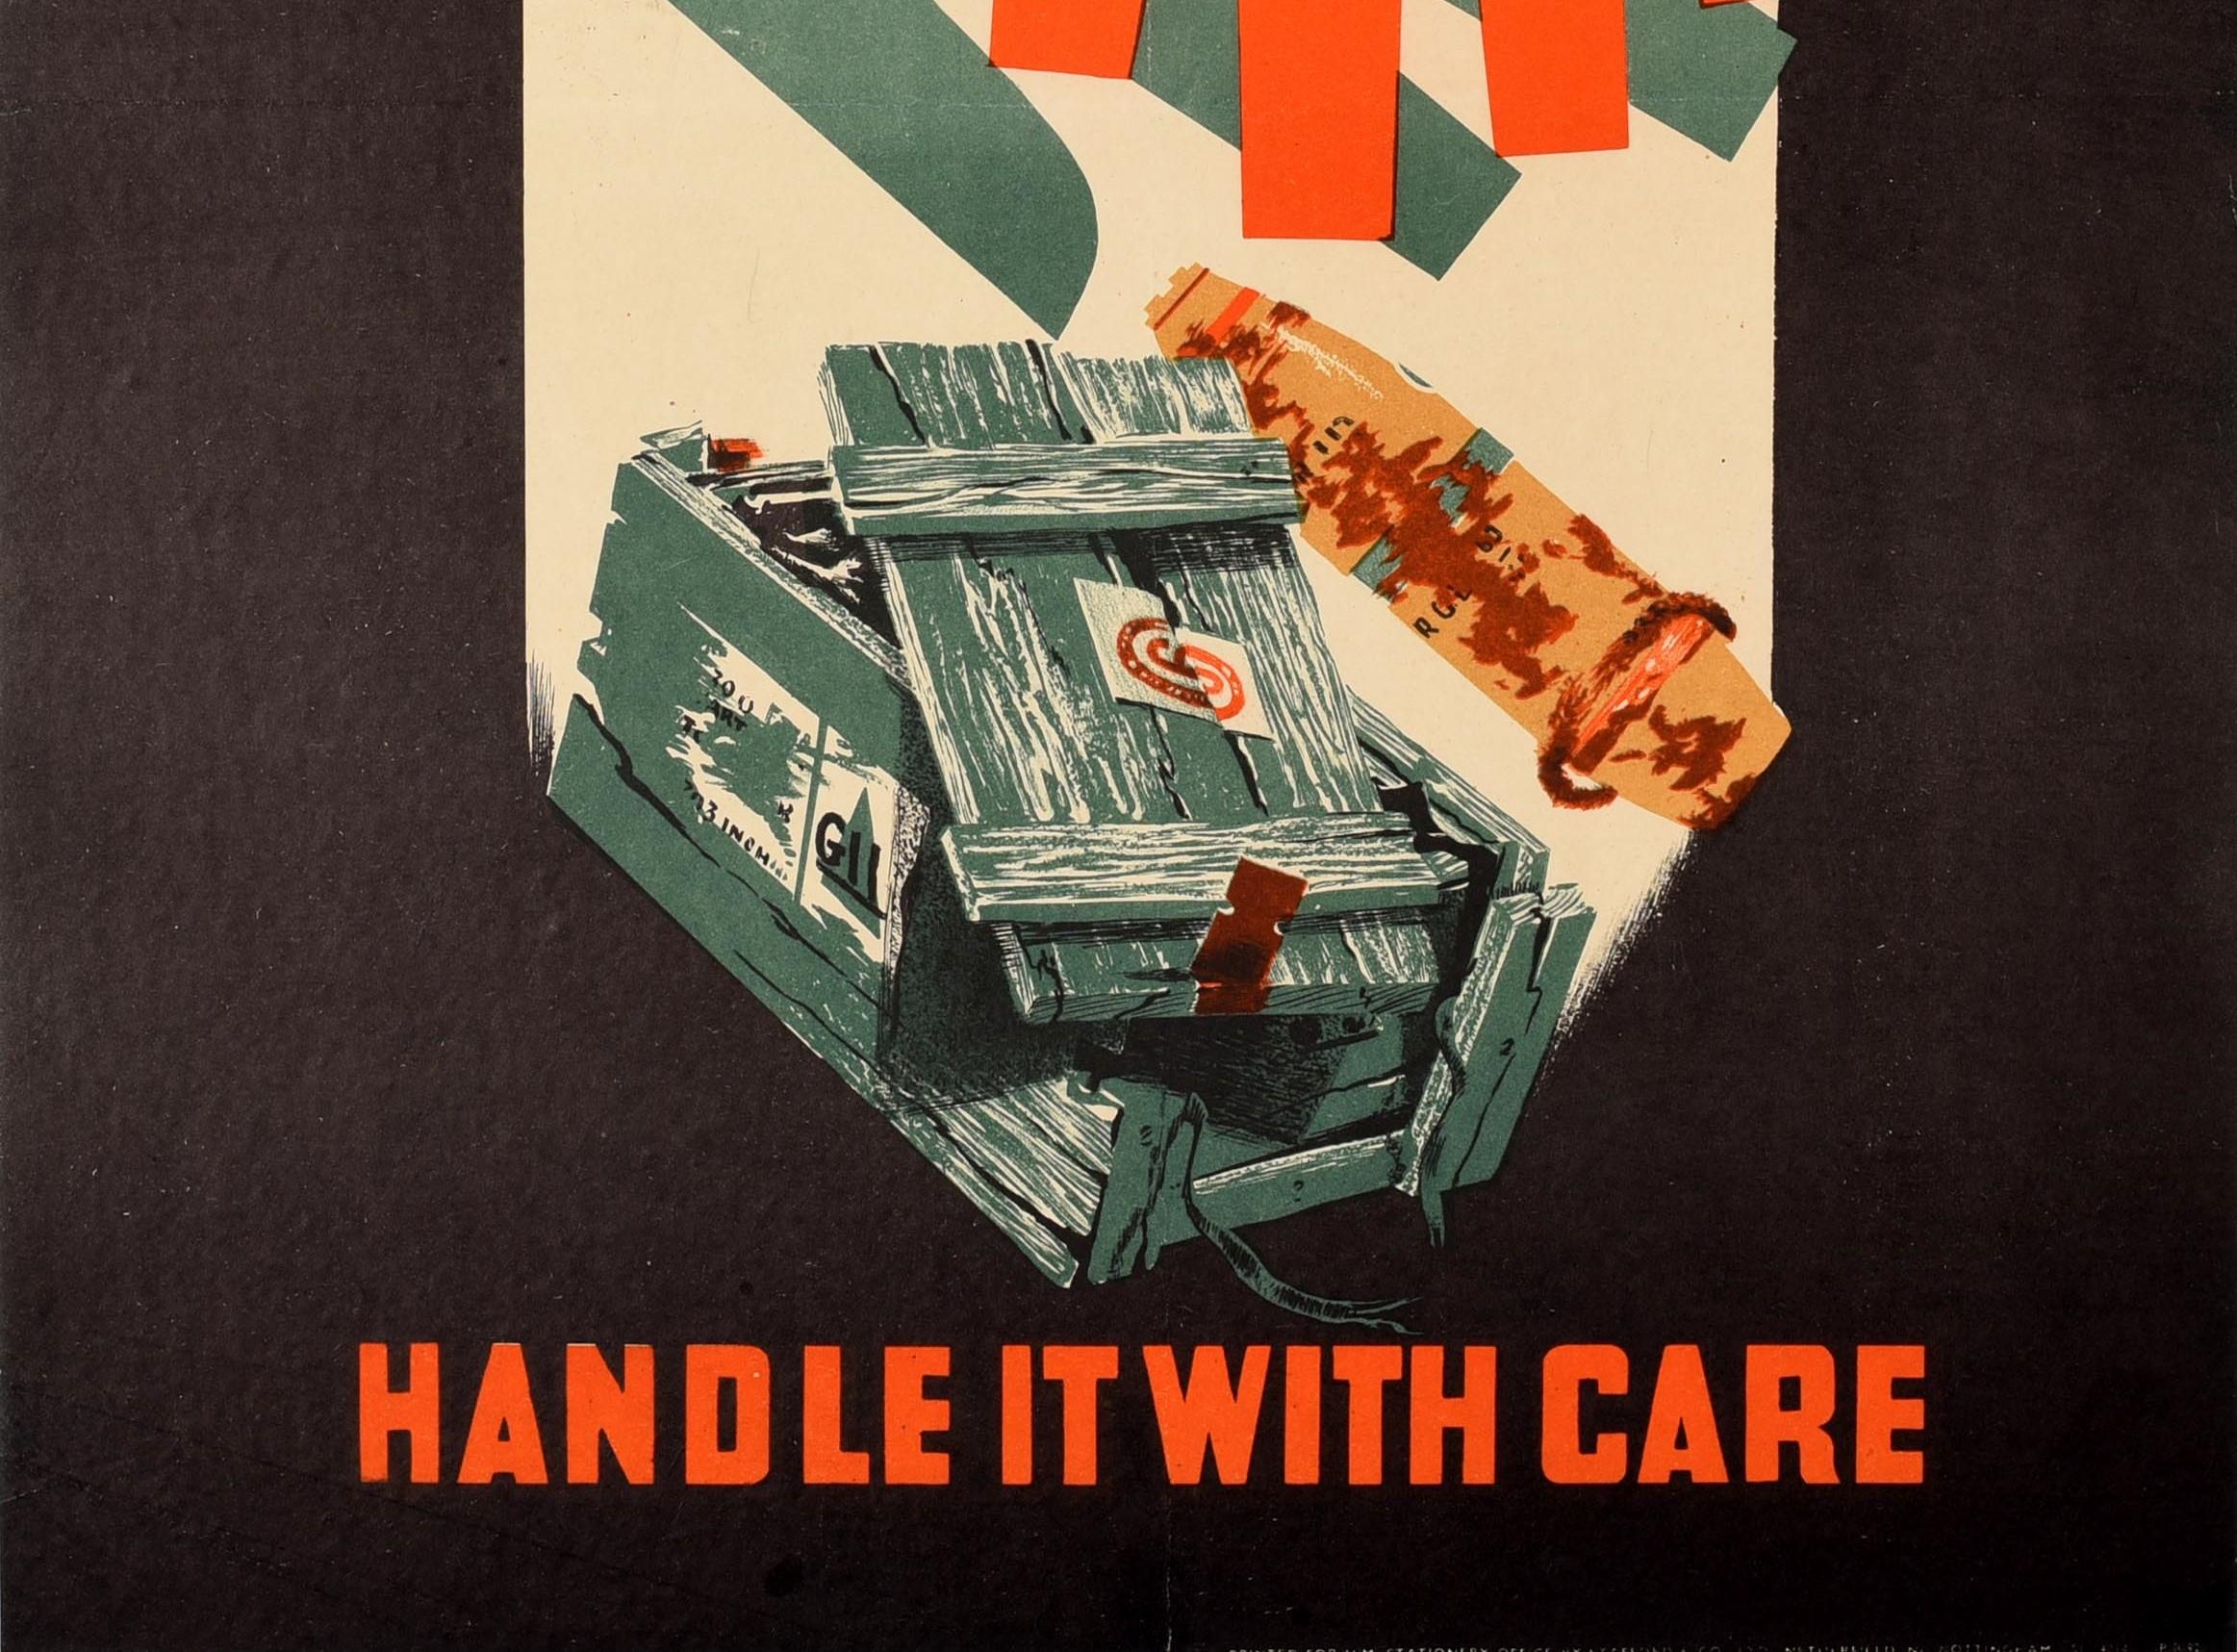 Britannique Original Vintage WWII Poster Rough Handling Ruins Ammunition Safety Care Warning (anglais seulement) en vente